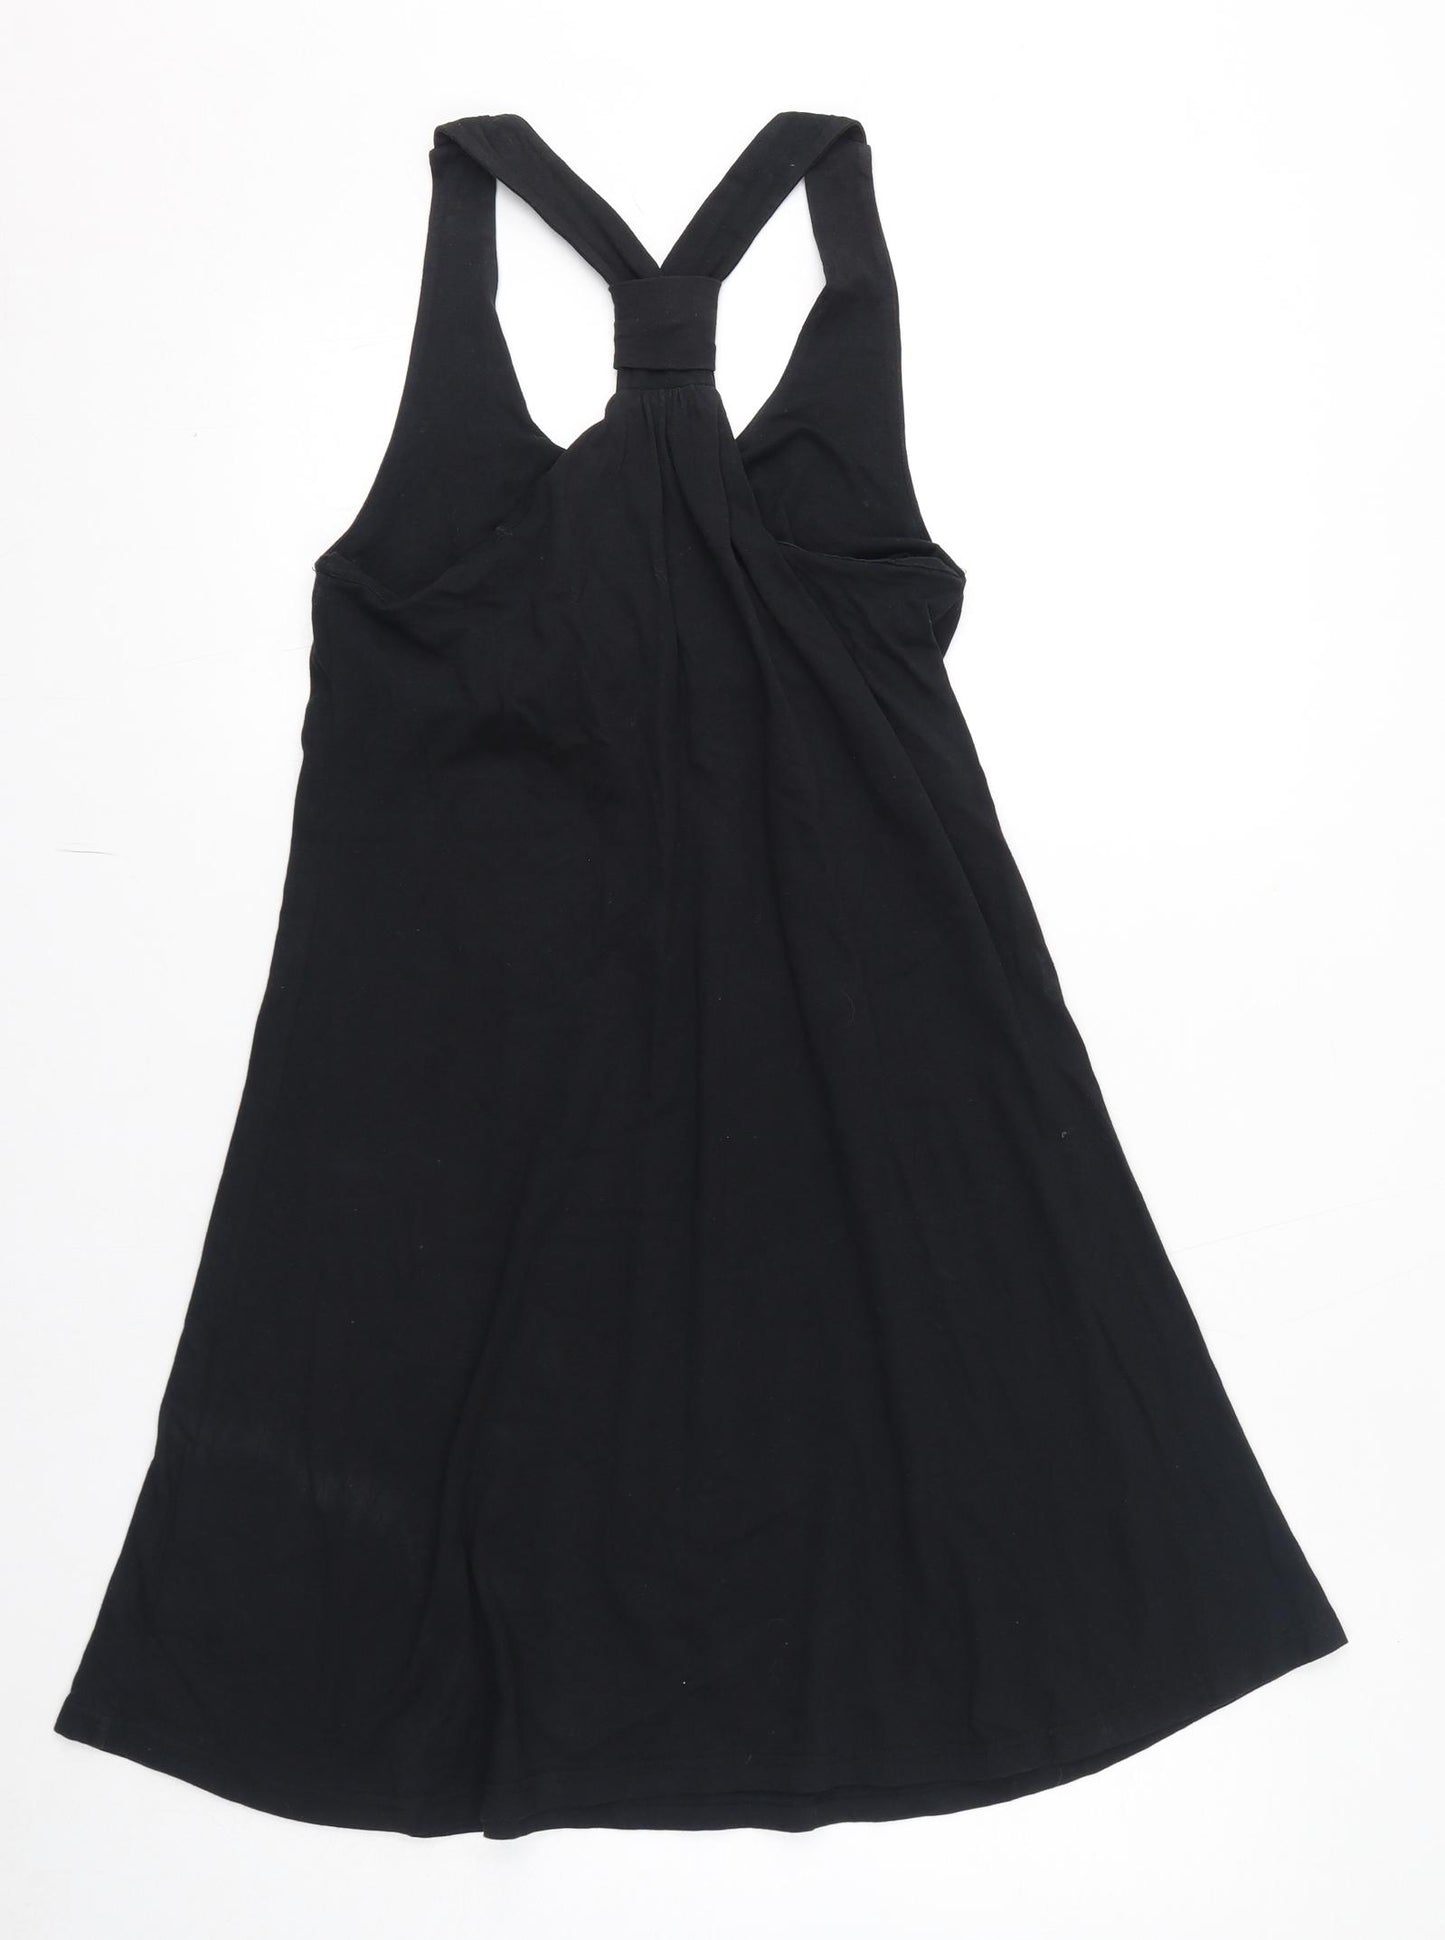 ROXY Womens Black 100% Cotton Tank Dress Size XL Round Neck Pullover - Sport Logo Built-In Bra